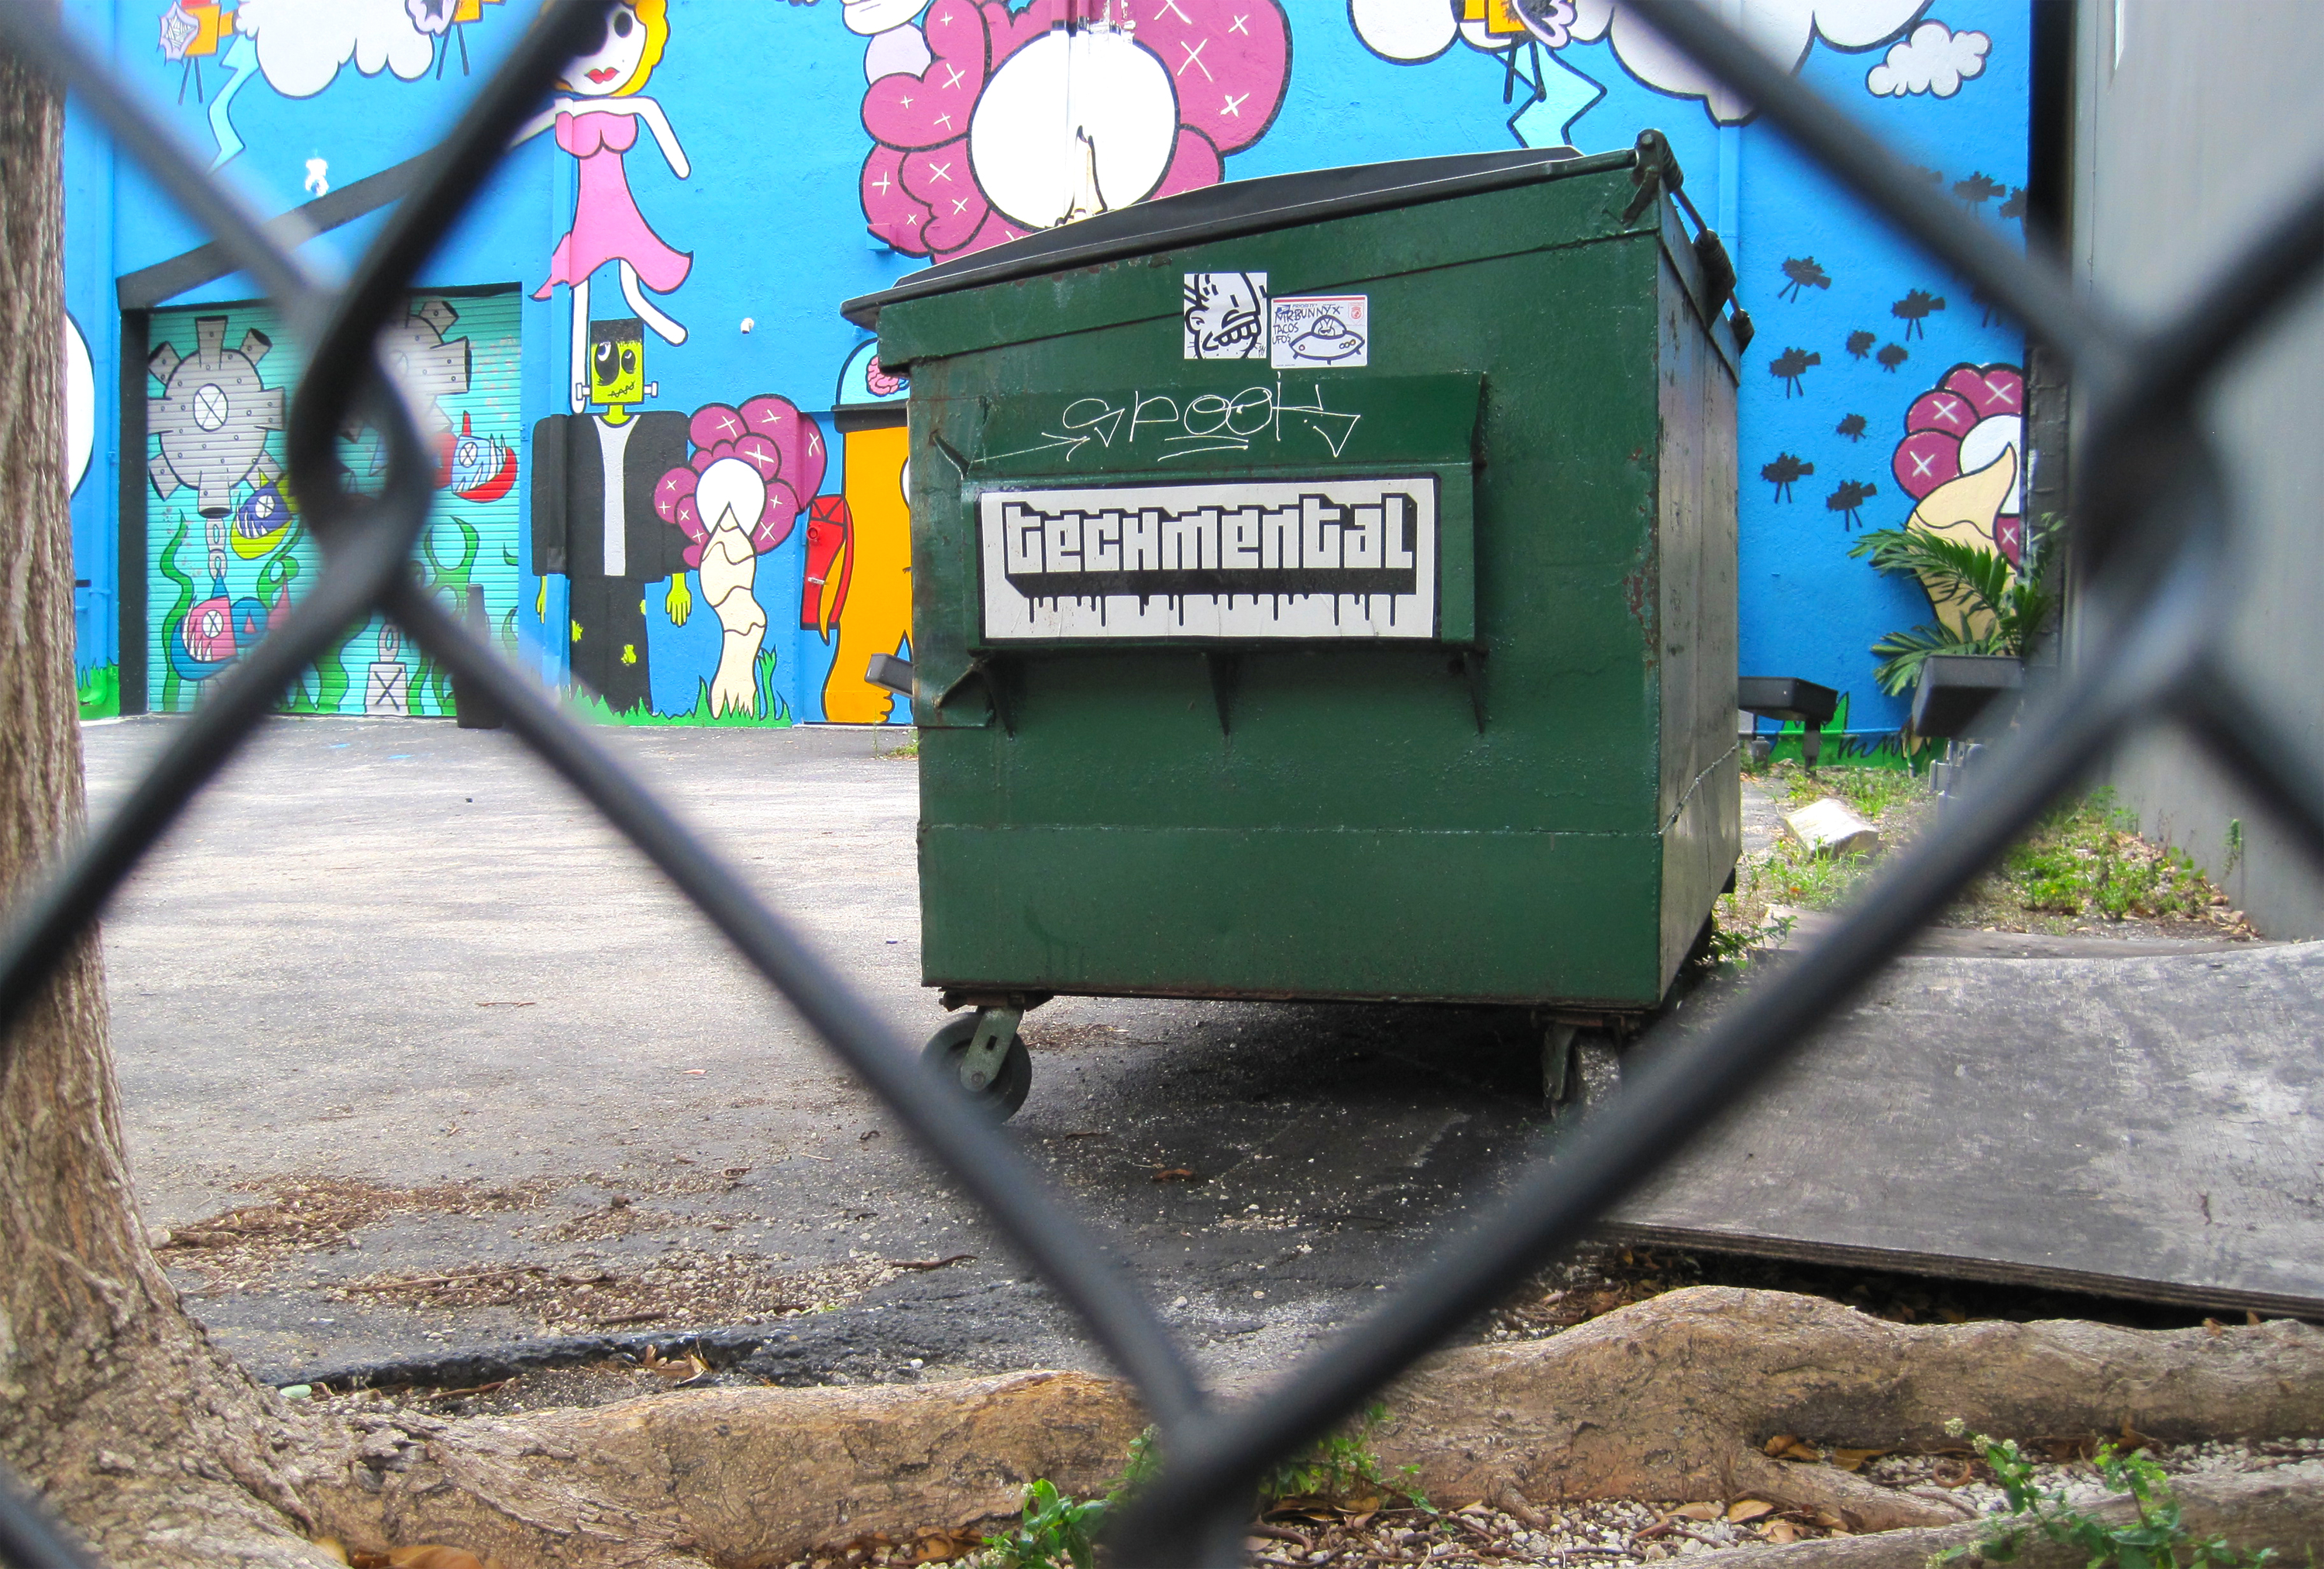 TechMental Sticker Art / Wynwood Art District / Miami